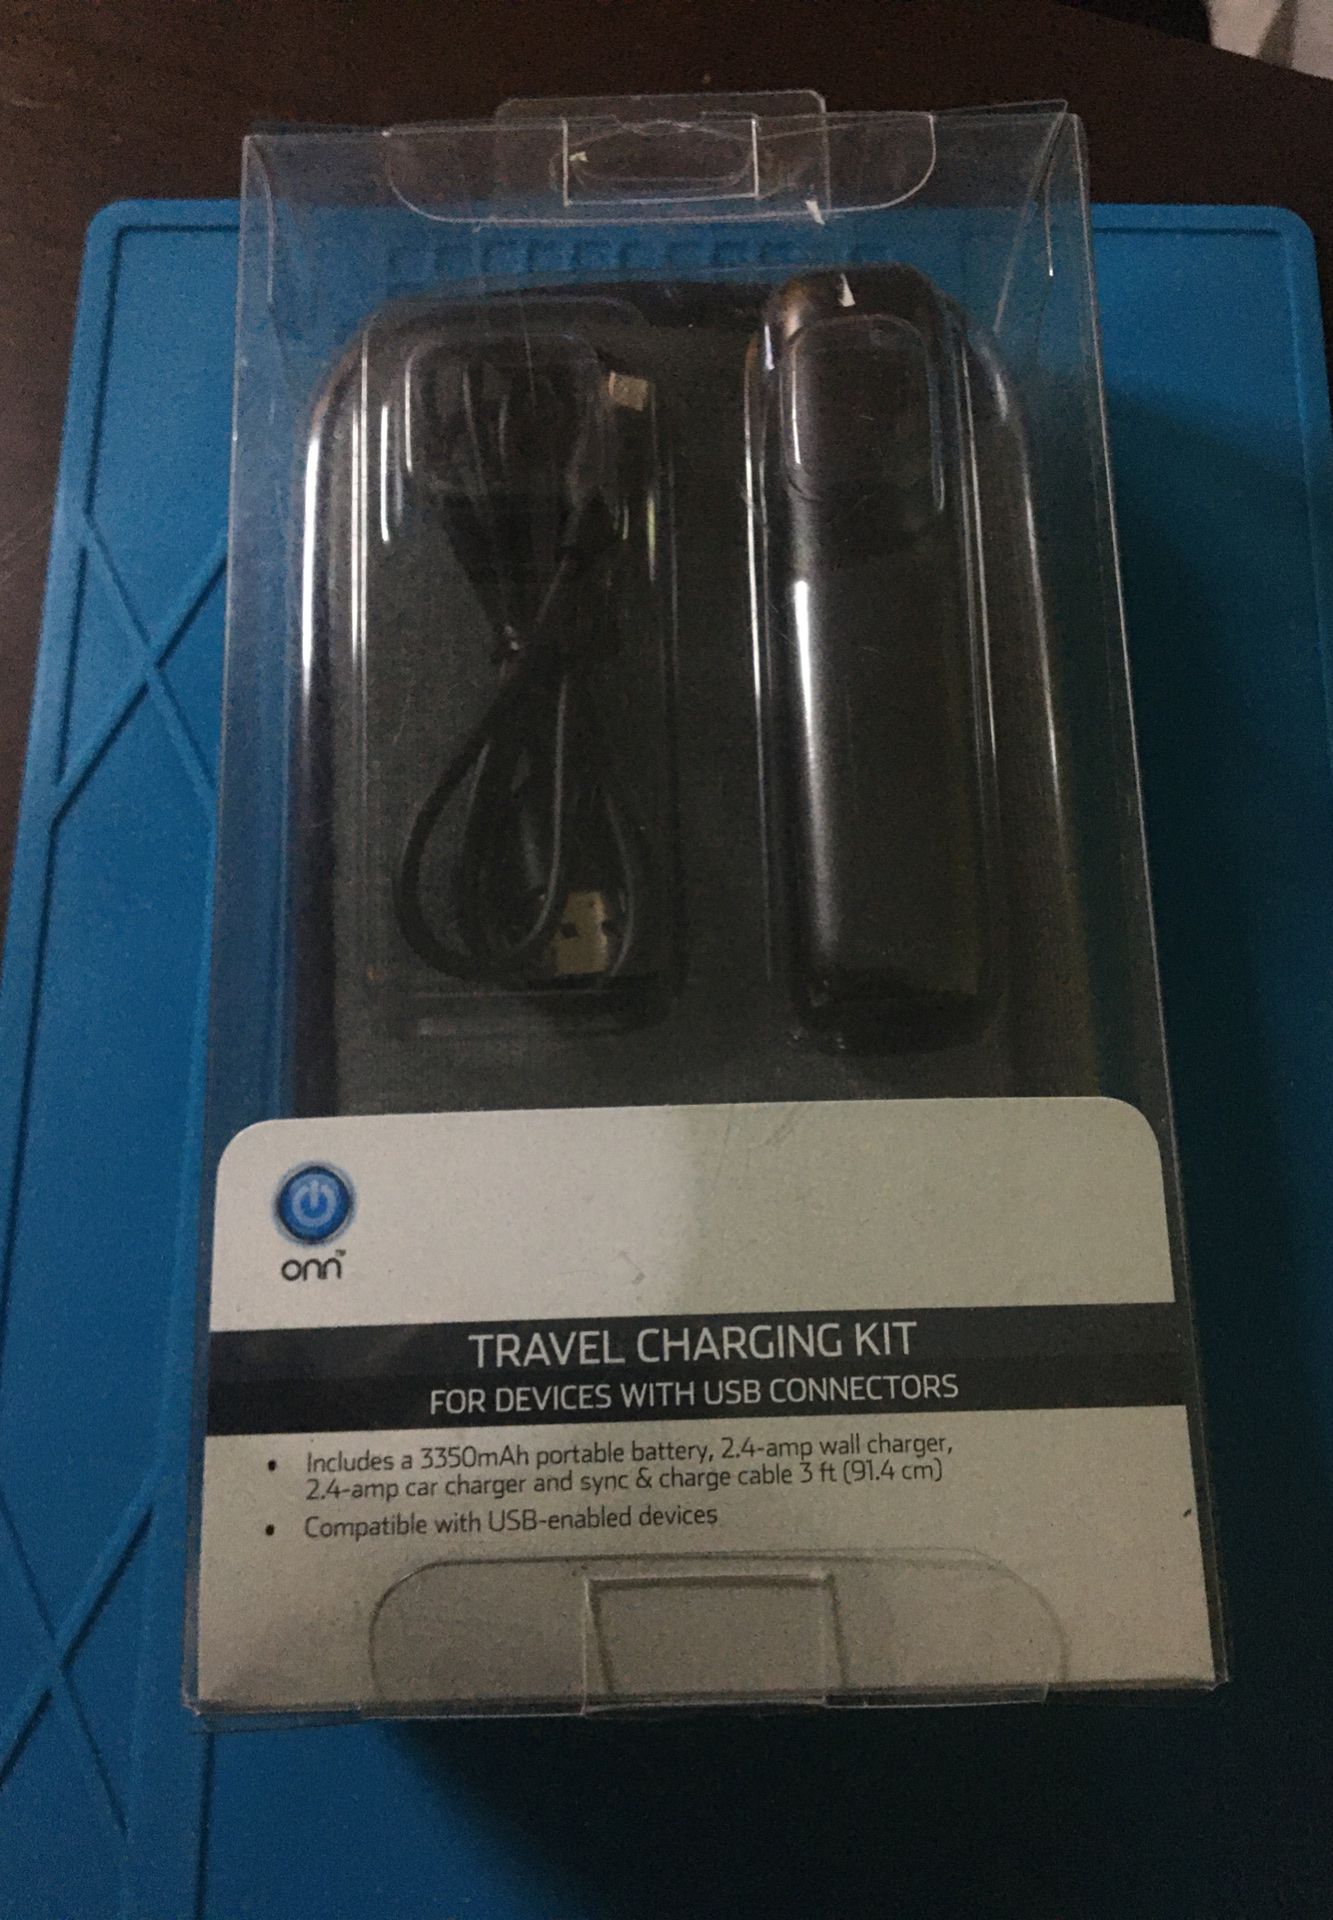 Onn Travel Charging Kit